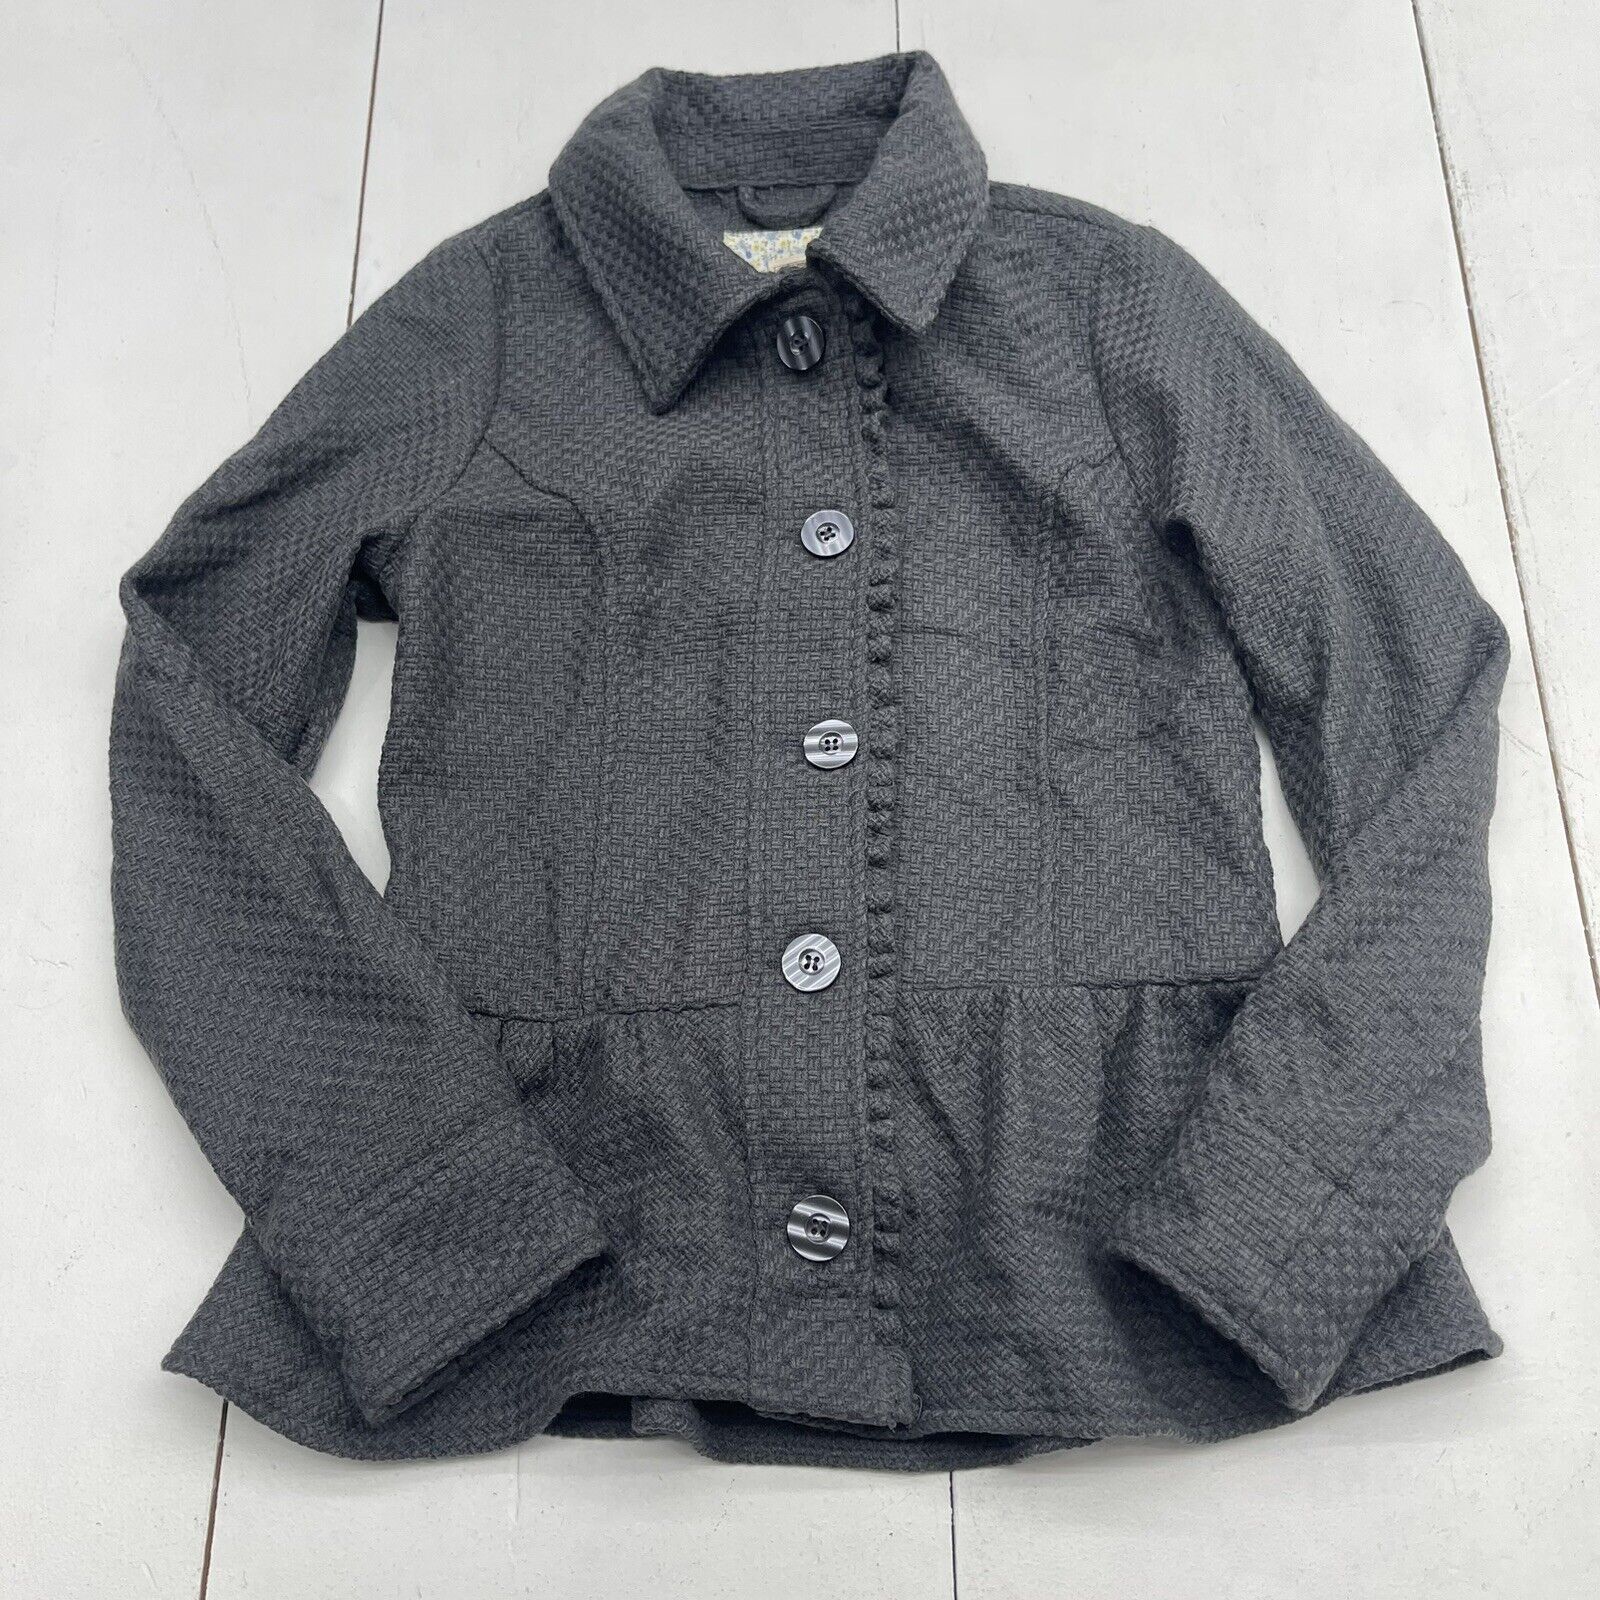 Decree Grey Knit Ruffle Button Up Blazer Jacket Women’s Size Medium New